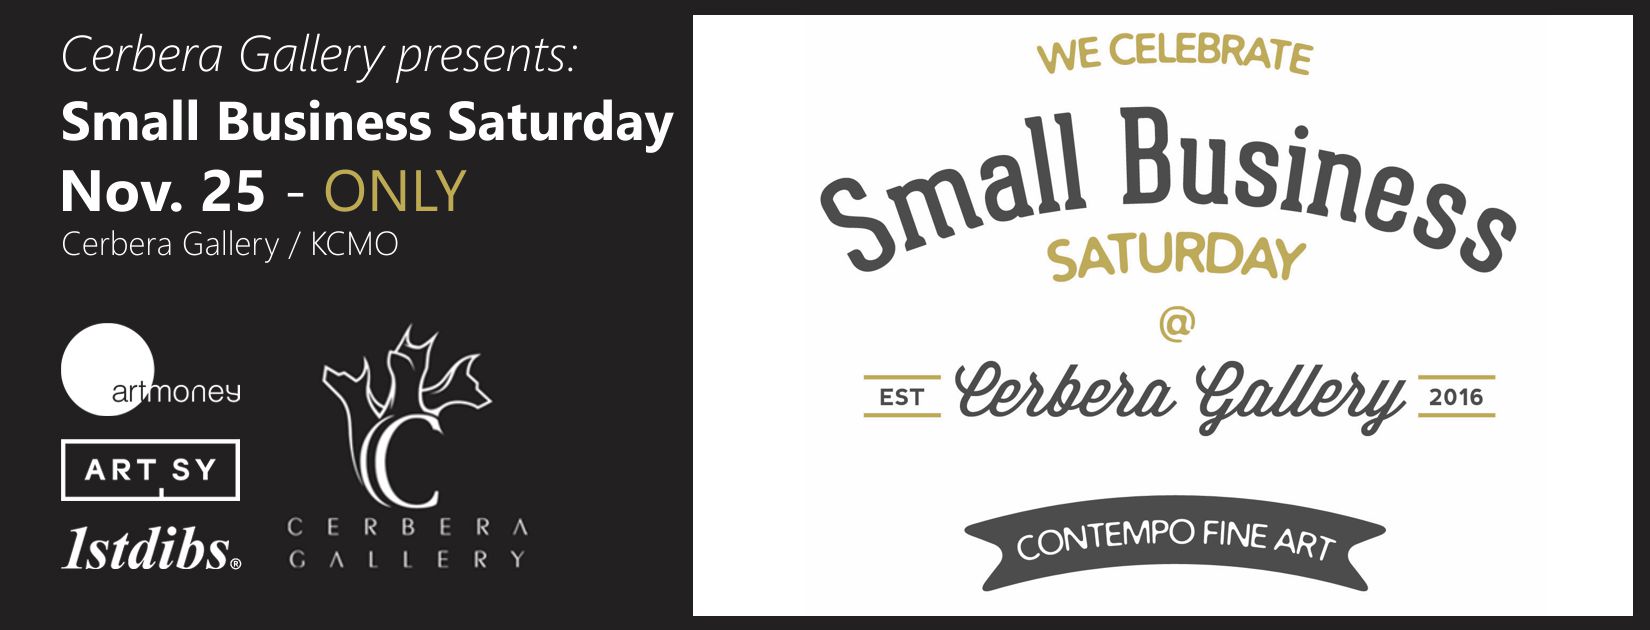 Cerbera Gallery - Small Business Saturday Banner